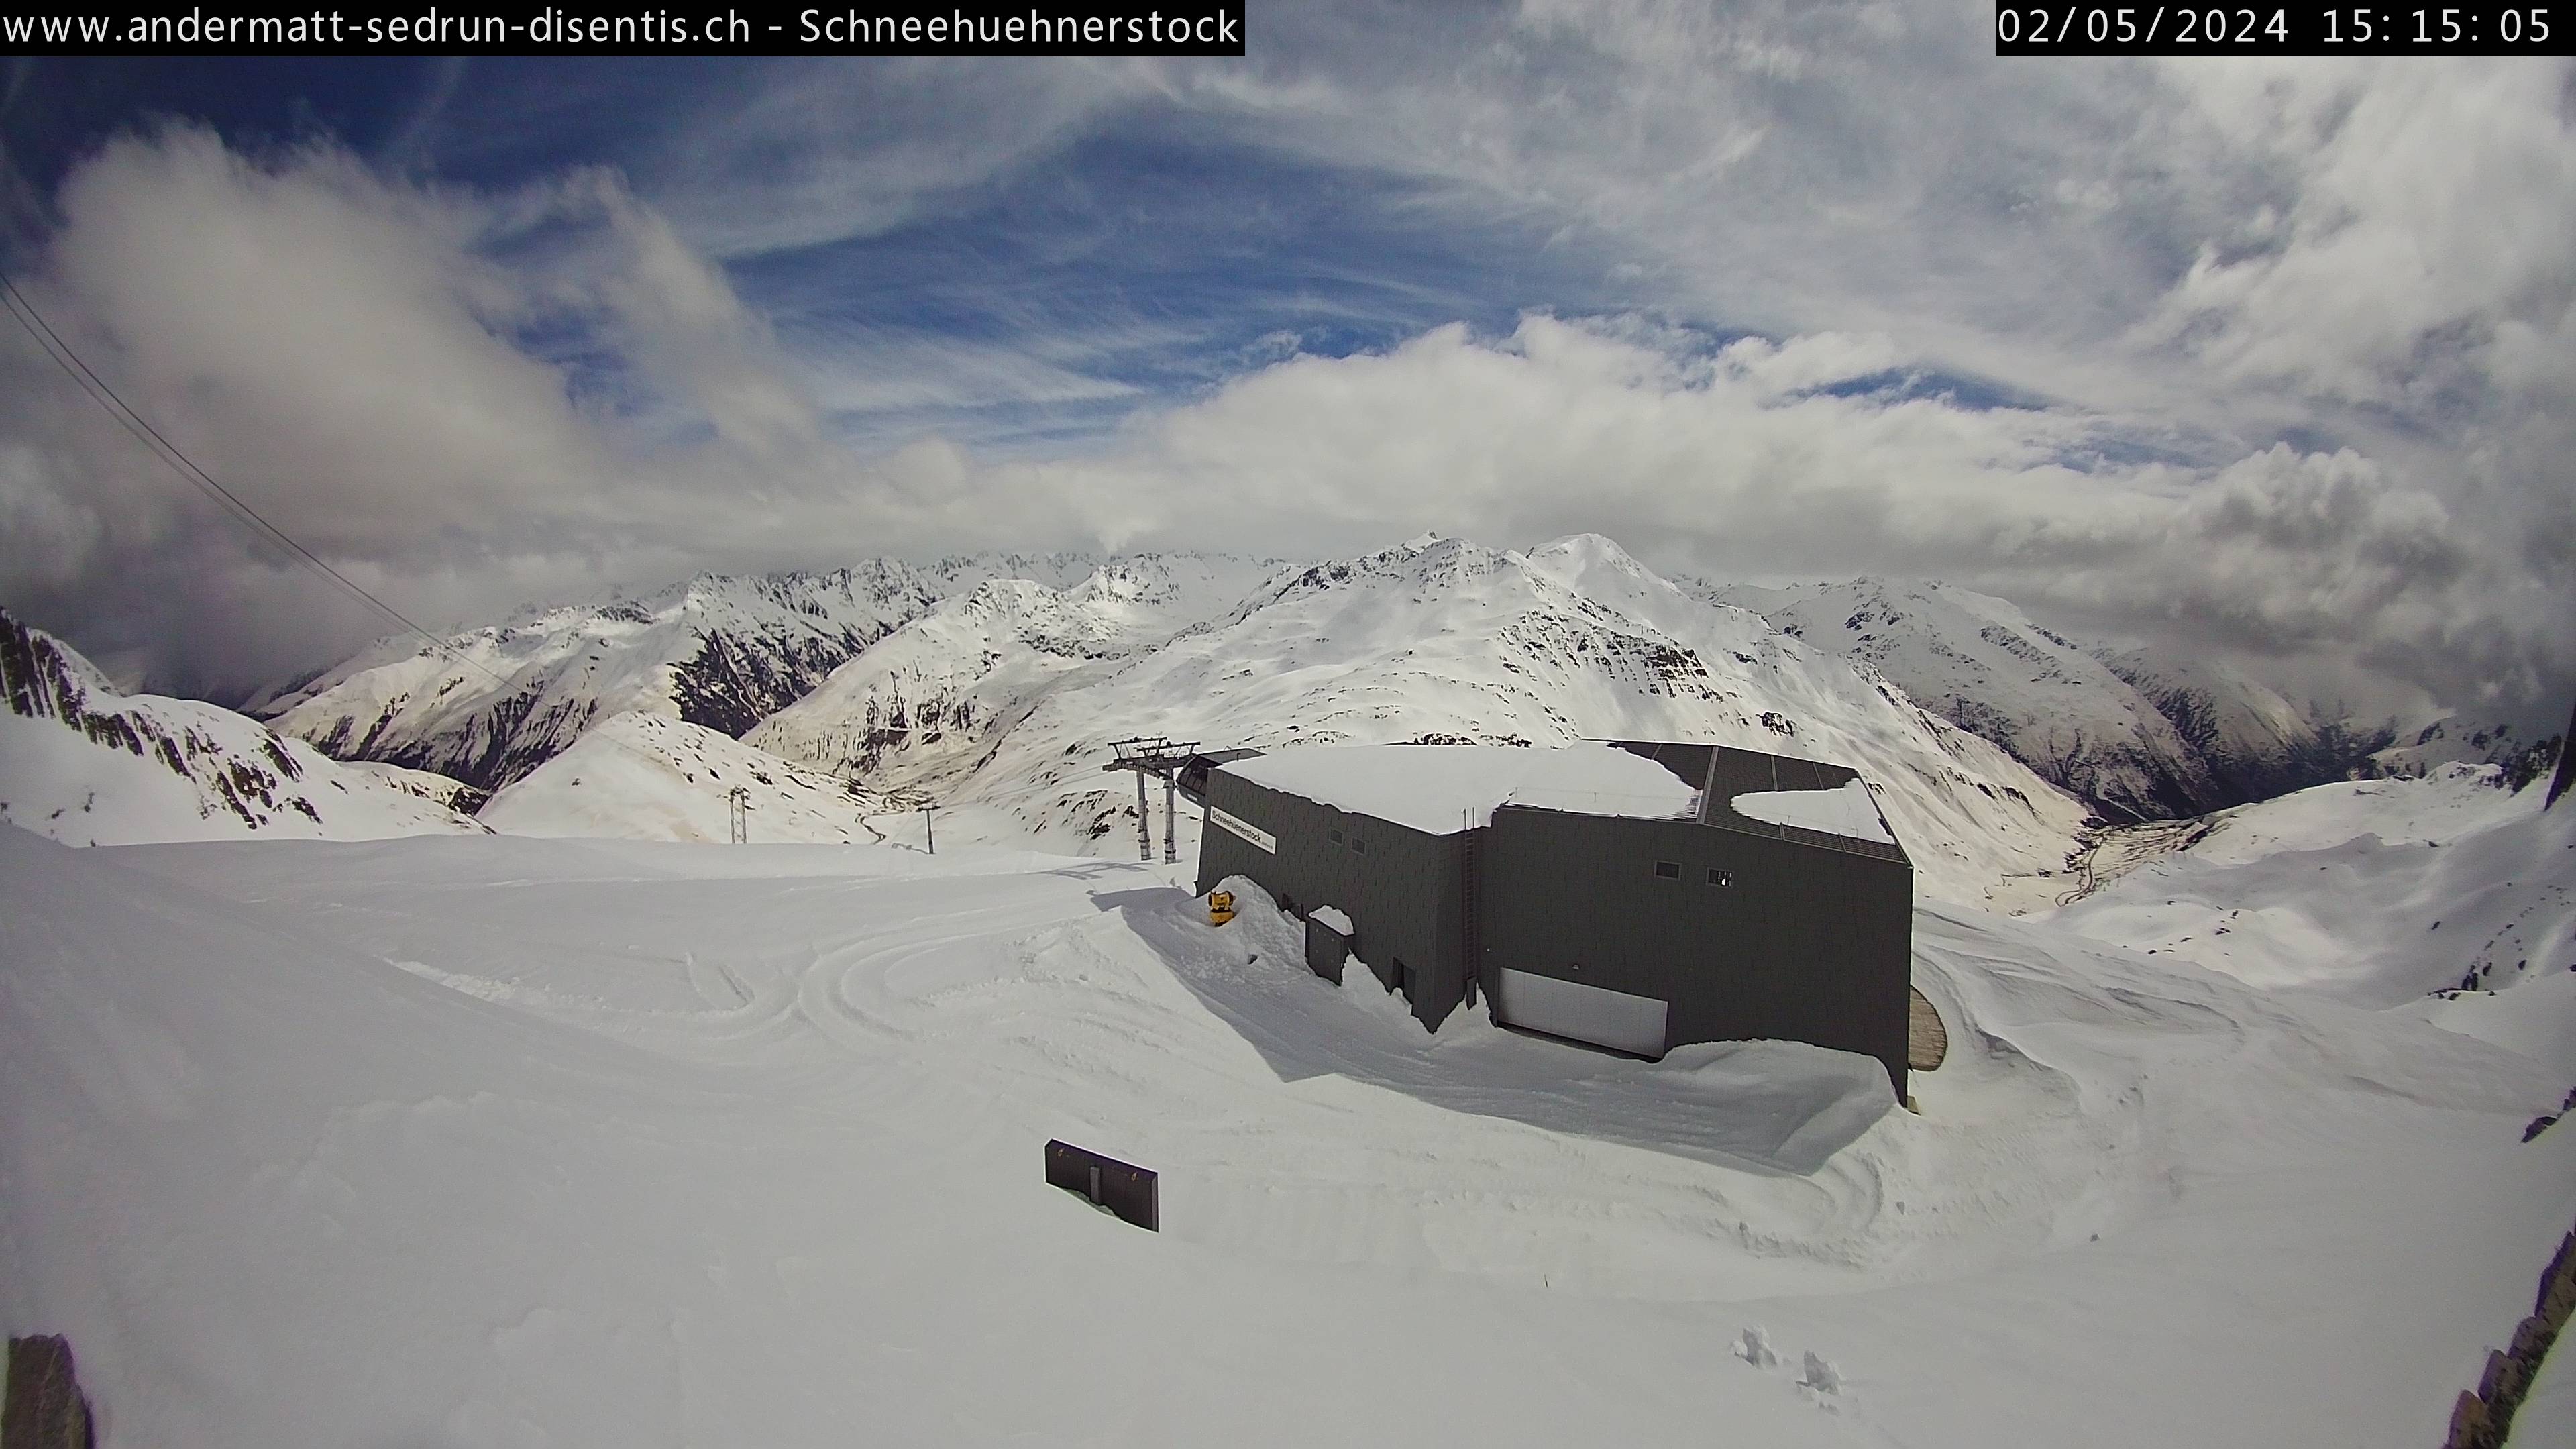 Schneehuerstock | Andermatt Sedrun cams